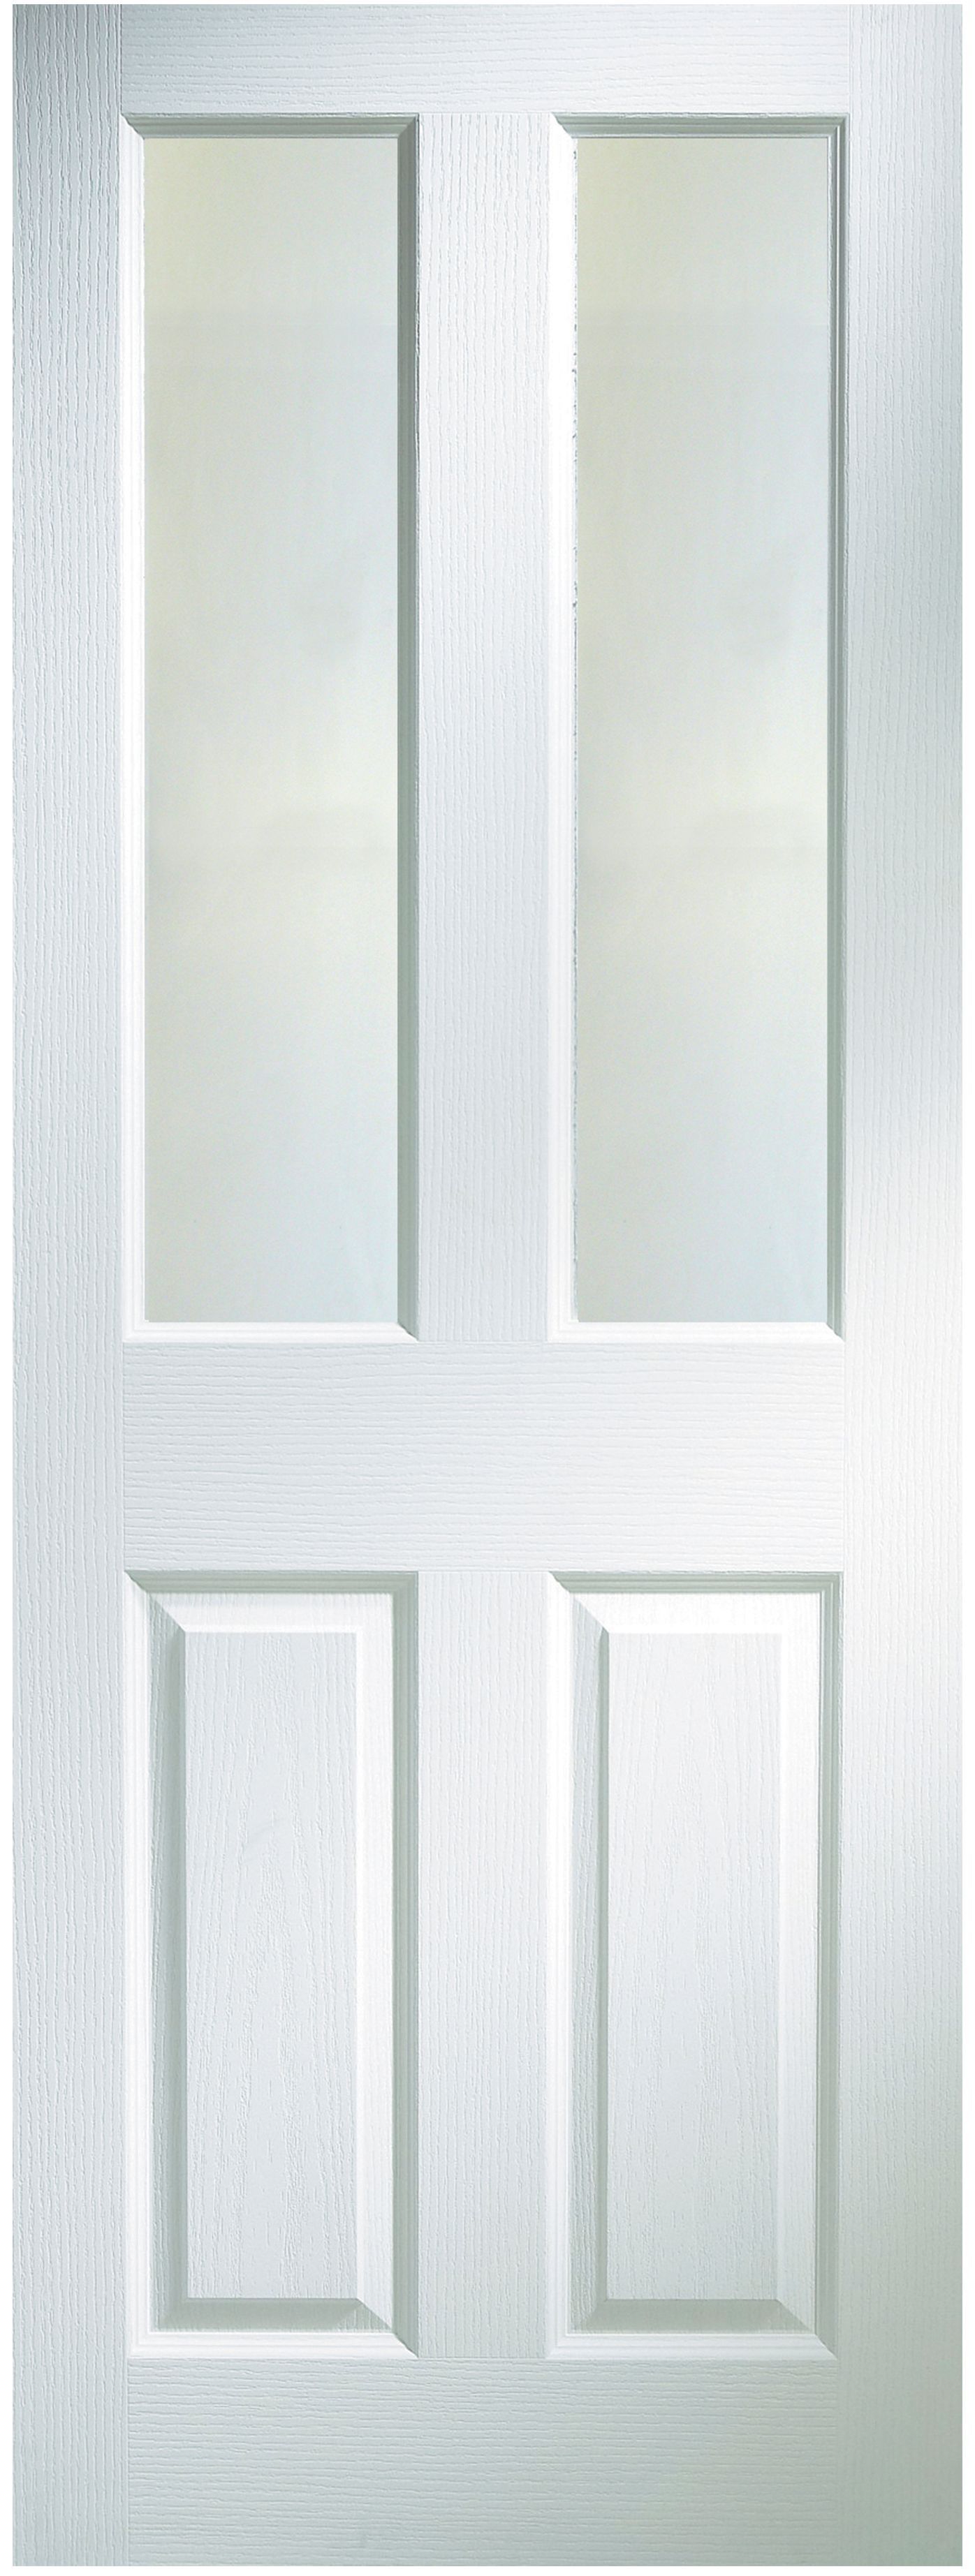 4 panel Frosted Glazed White Woodgrain effect Internal Door, (H)1981mm (W)686mm (T)35mm